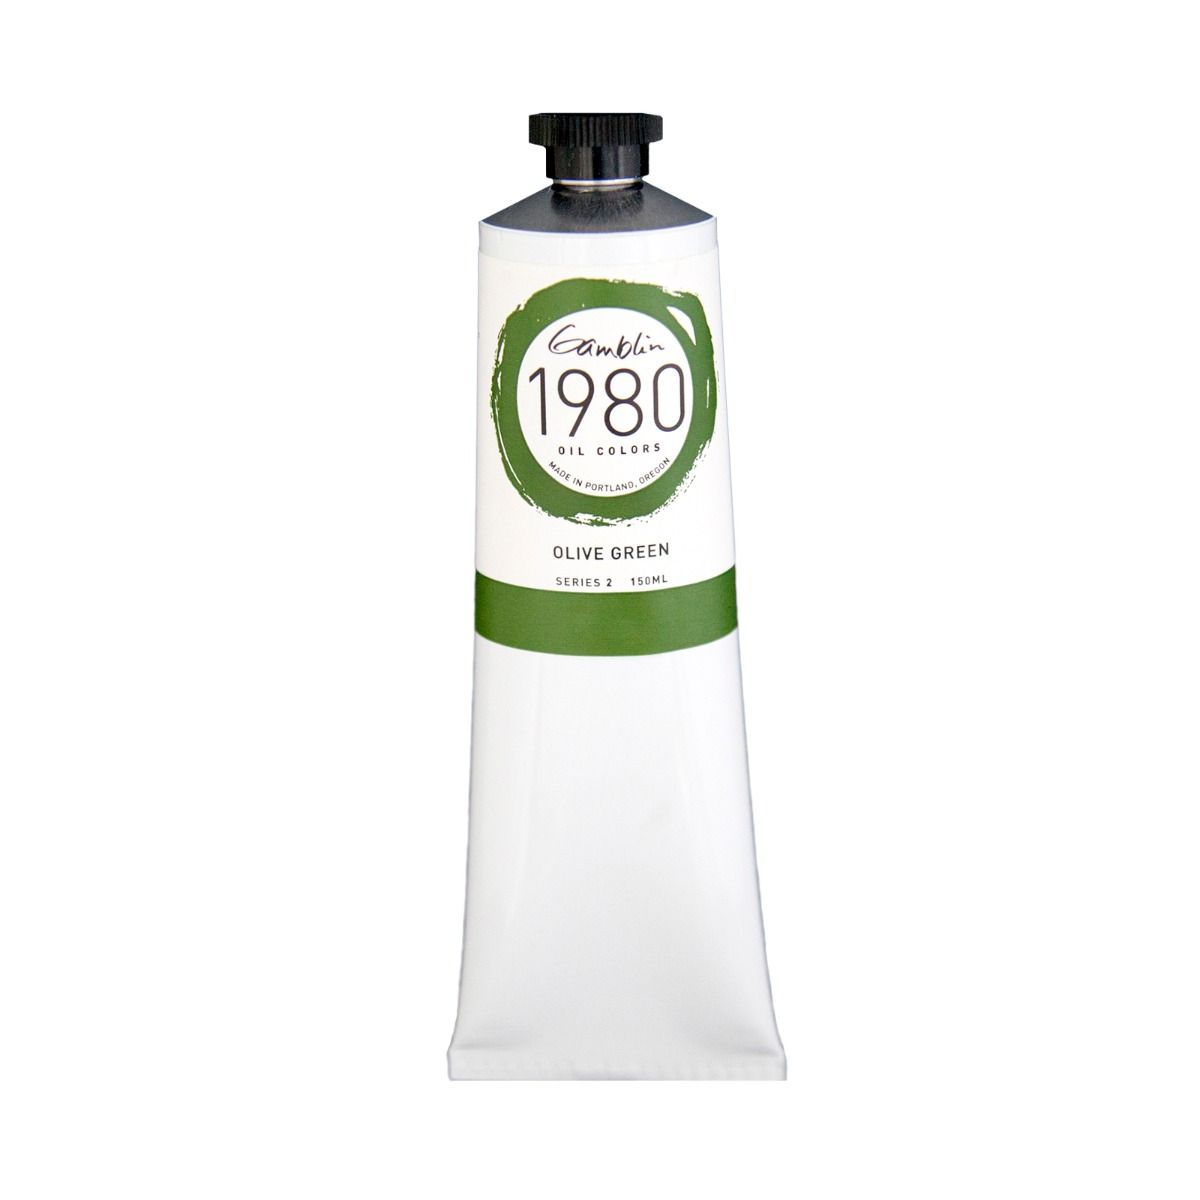 Gamblin 1980 Oils - Olive Green, 150 ml (5.07oz)